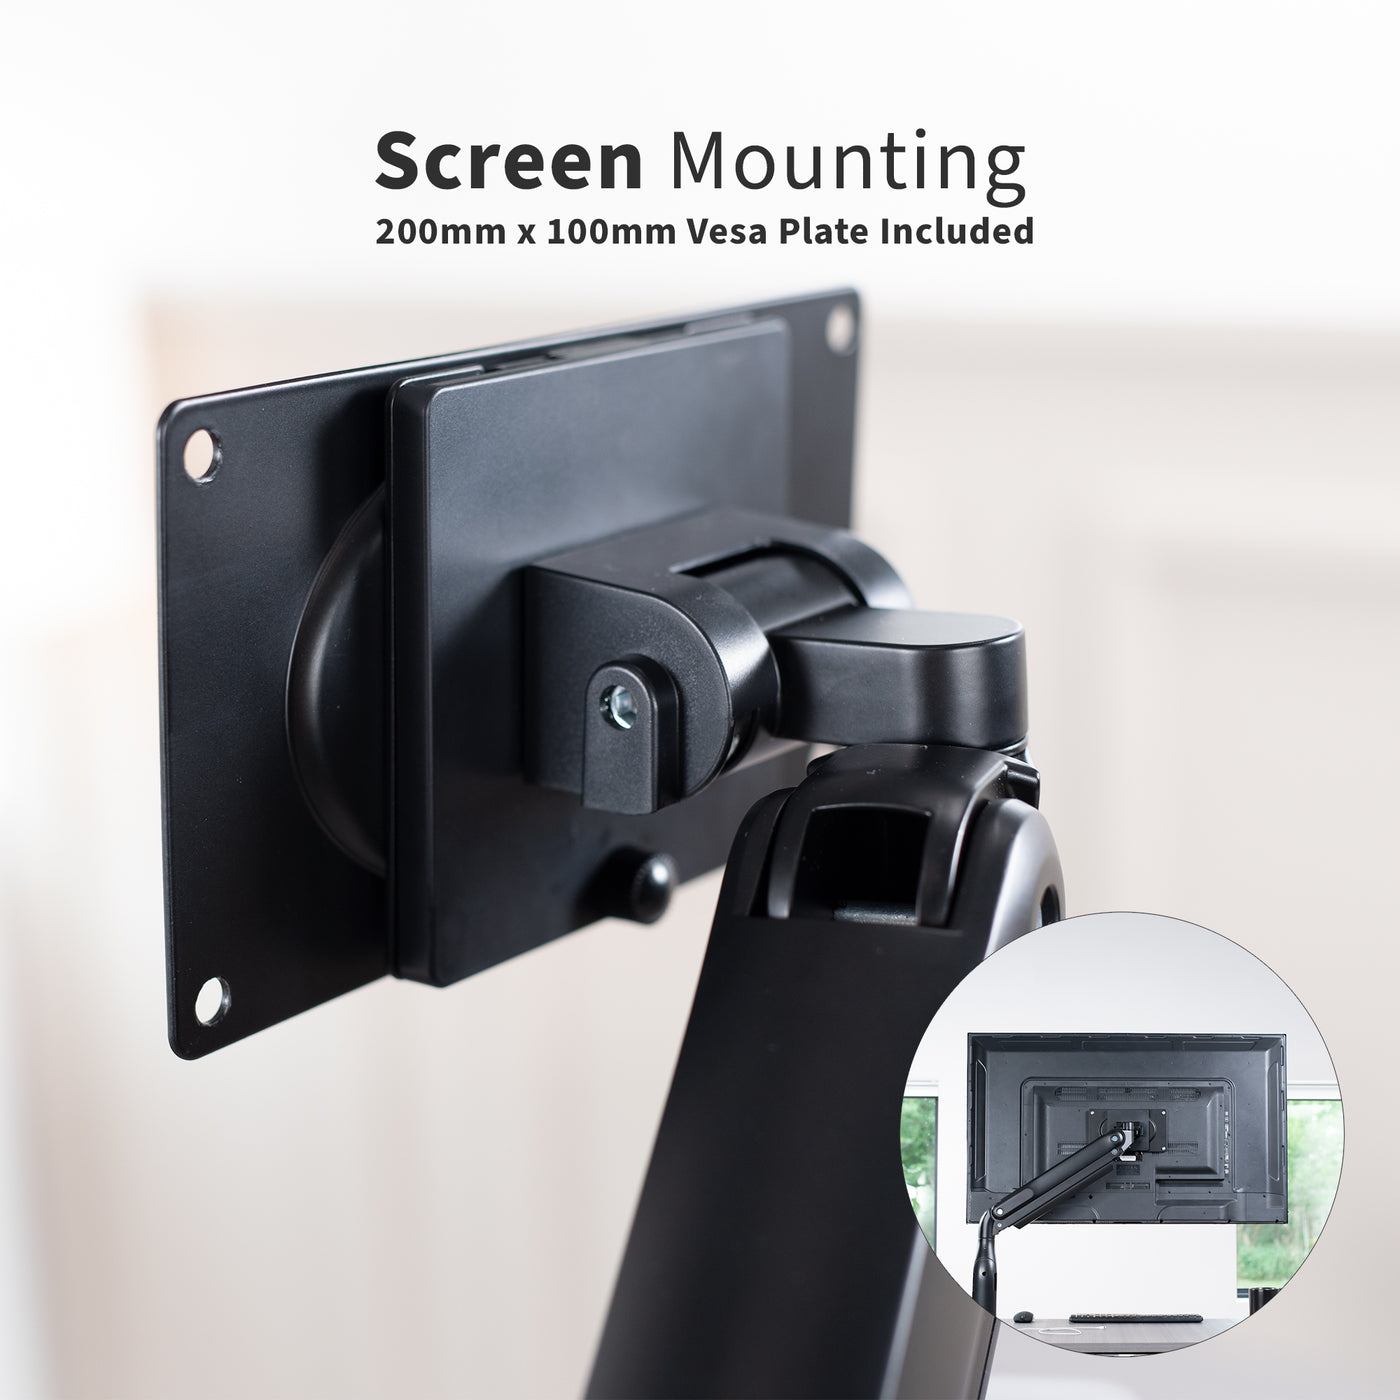 Sturdy adjustable pneumatic arm single ultrawide monitor ergonomic desk mount with USB ports for office workstation.